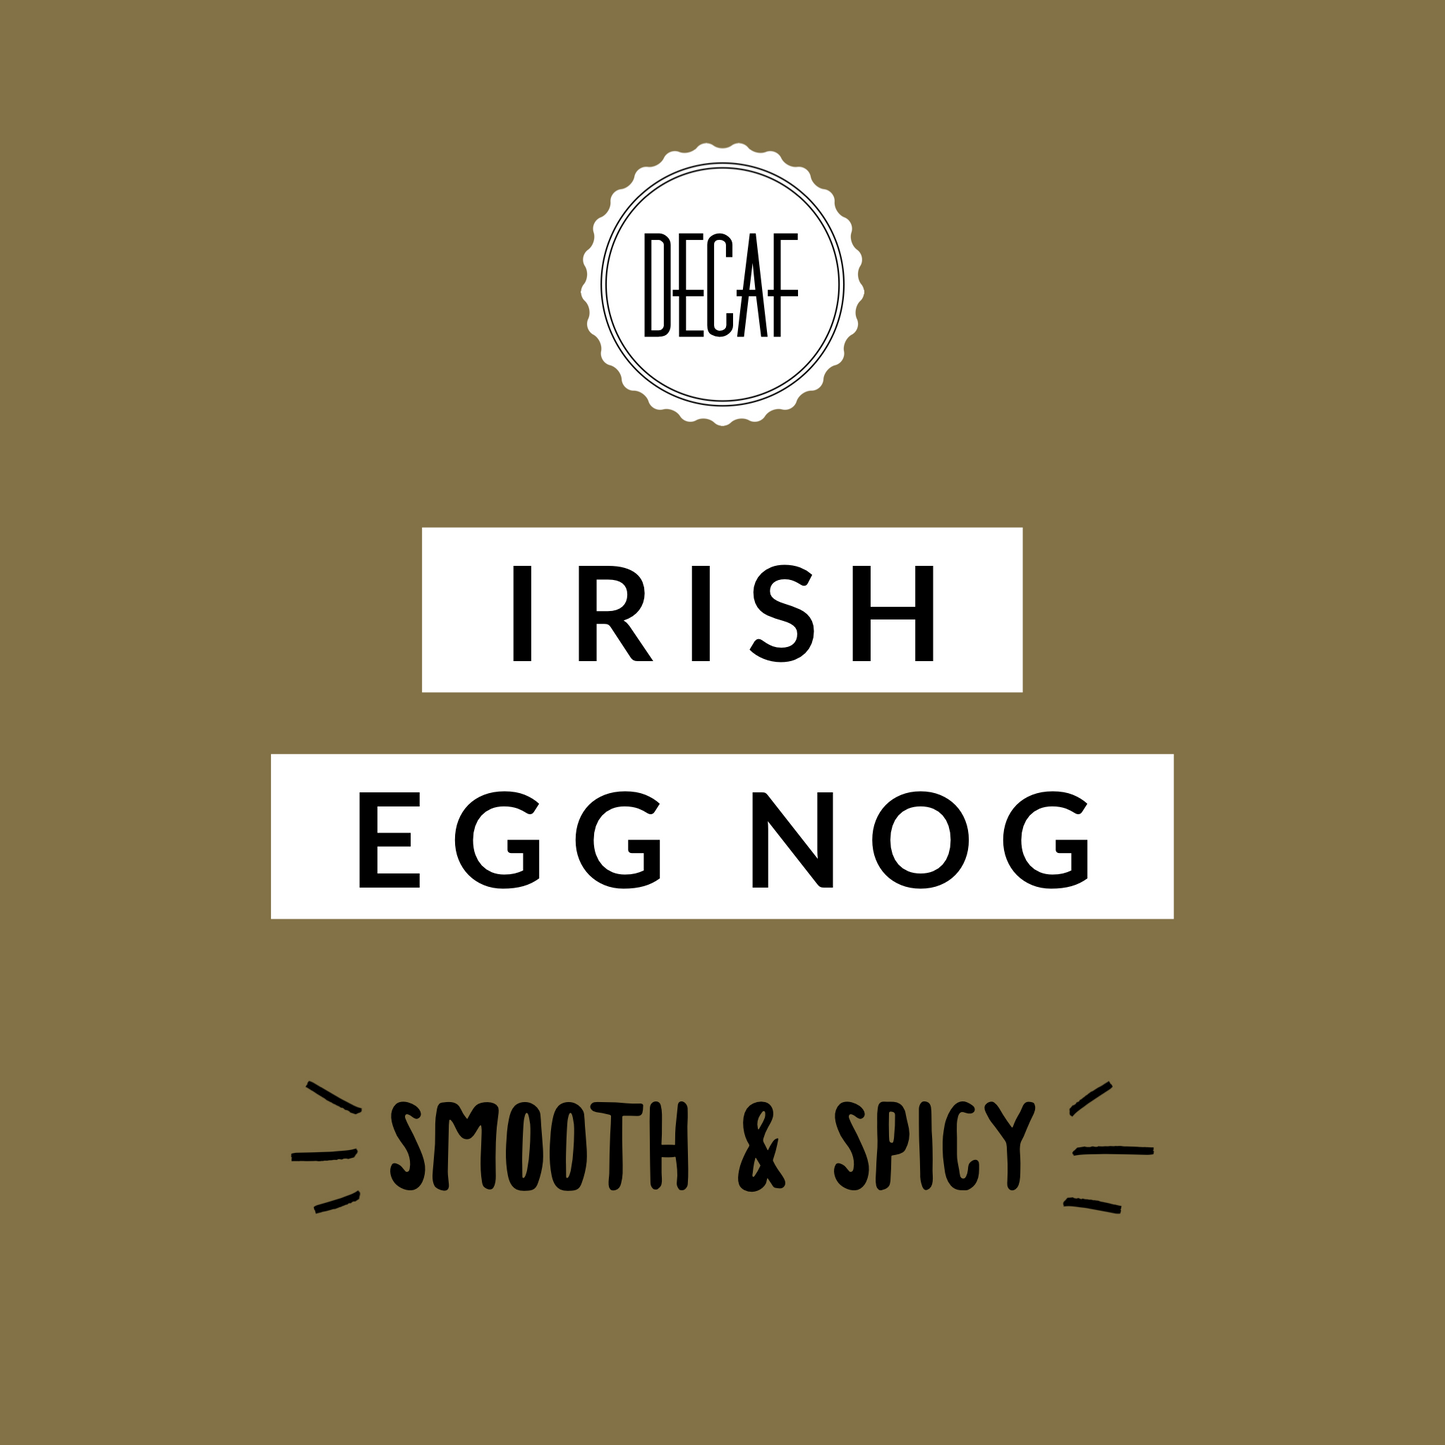 Irish Egg Nog Decaf